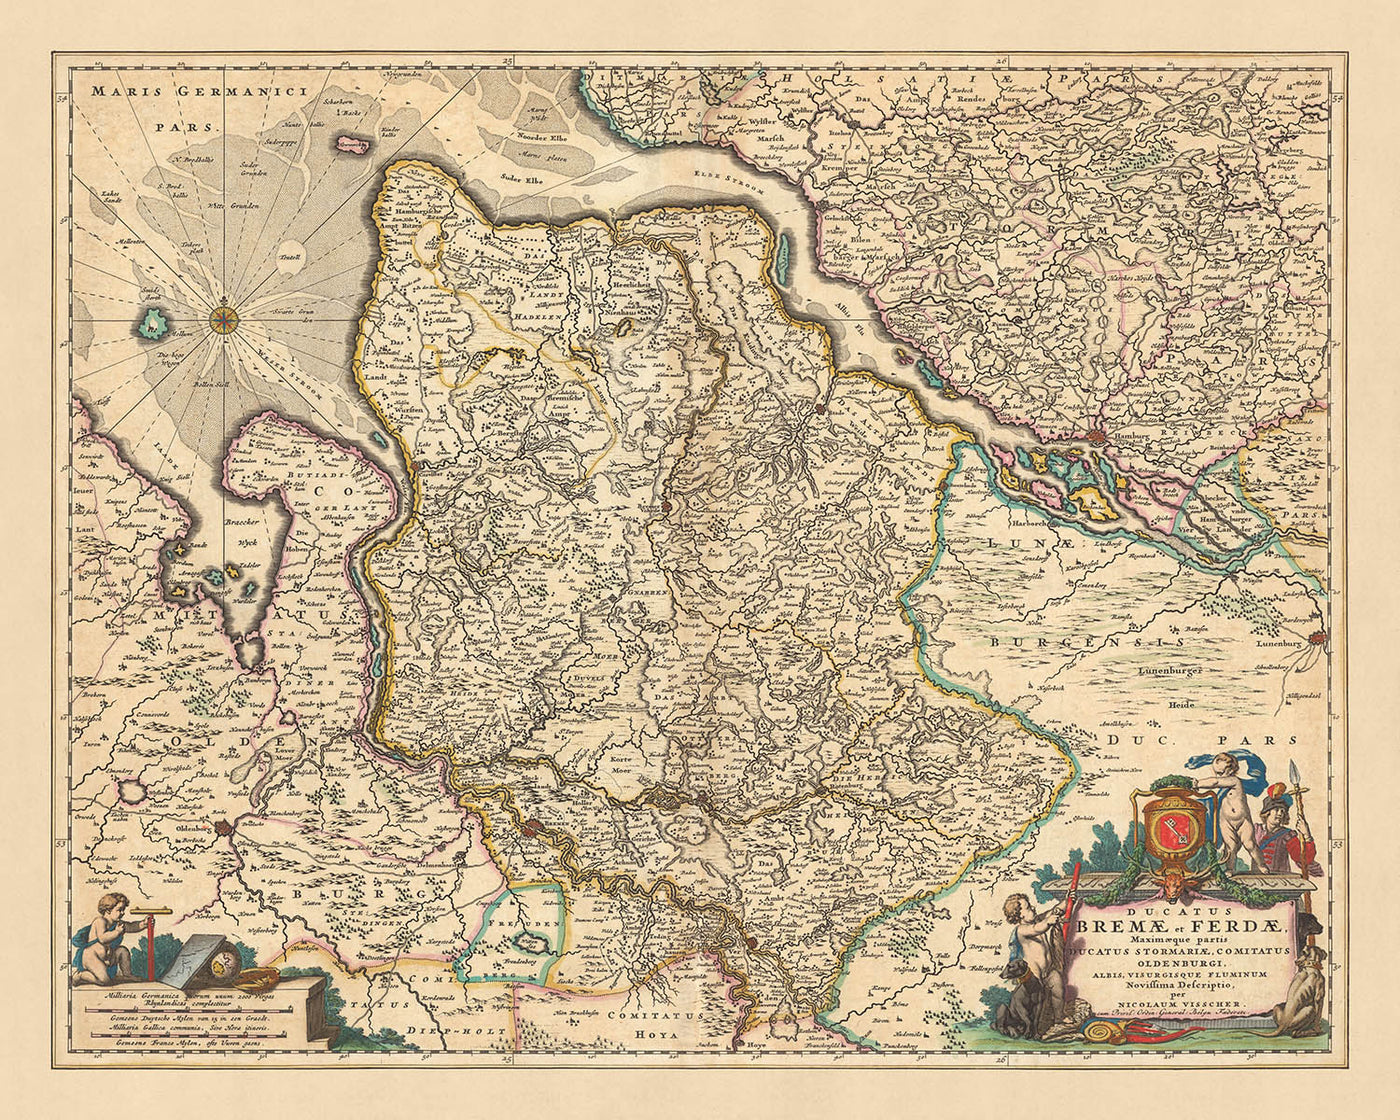 Old Map of Bremen and Verden: Visscher, 1690: Hamburg, Oldenburg, Lüneberg, Bremerhaven, Stade